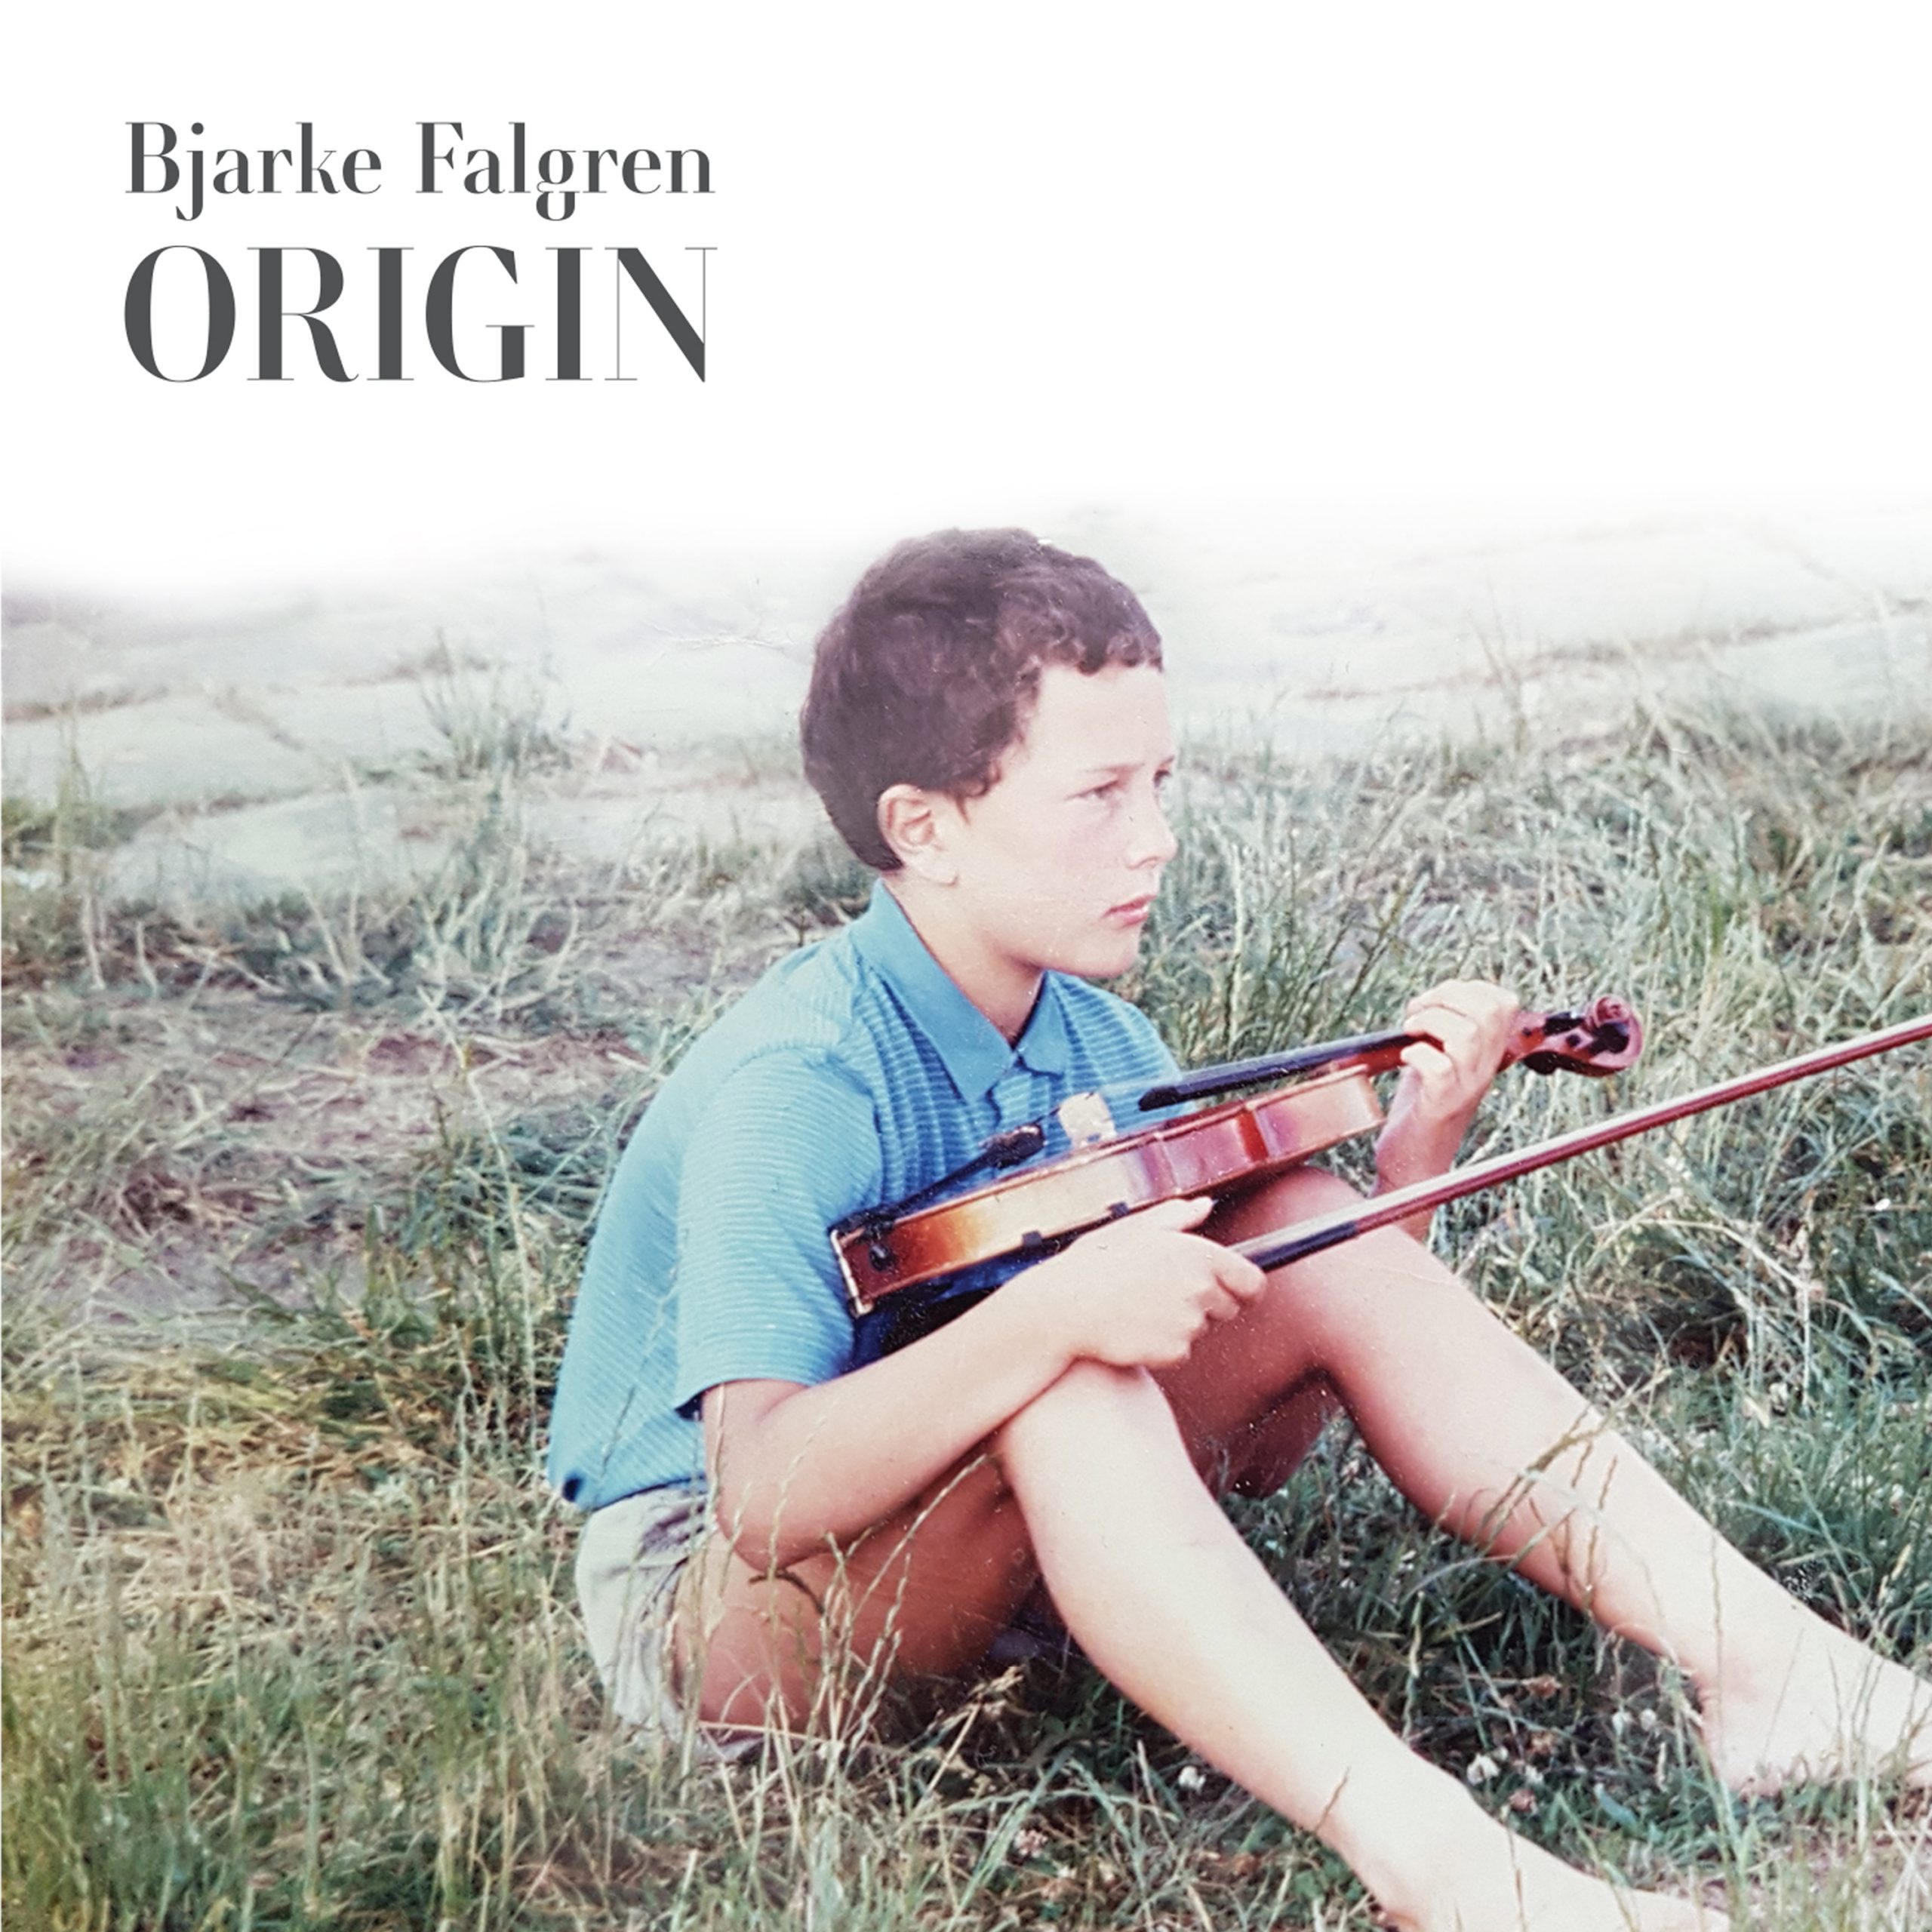 Origin - now available on Vinyl!